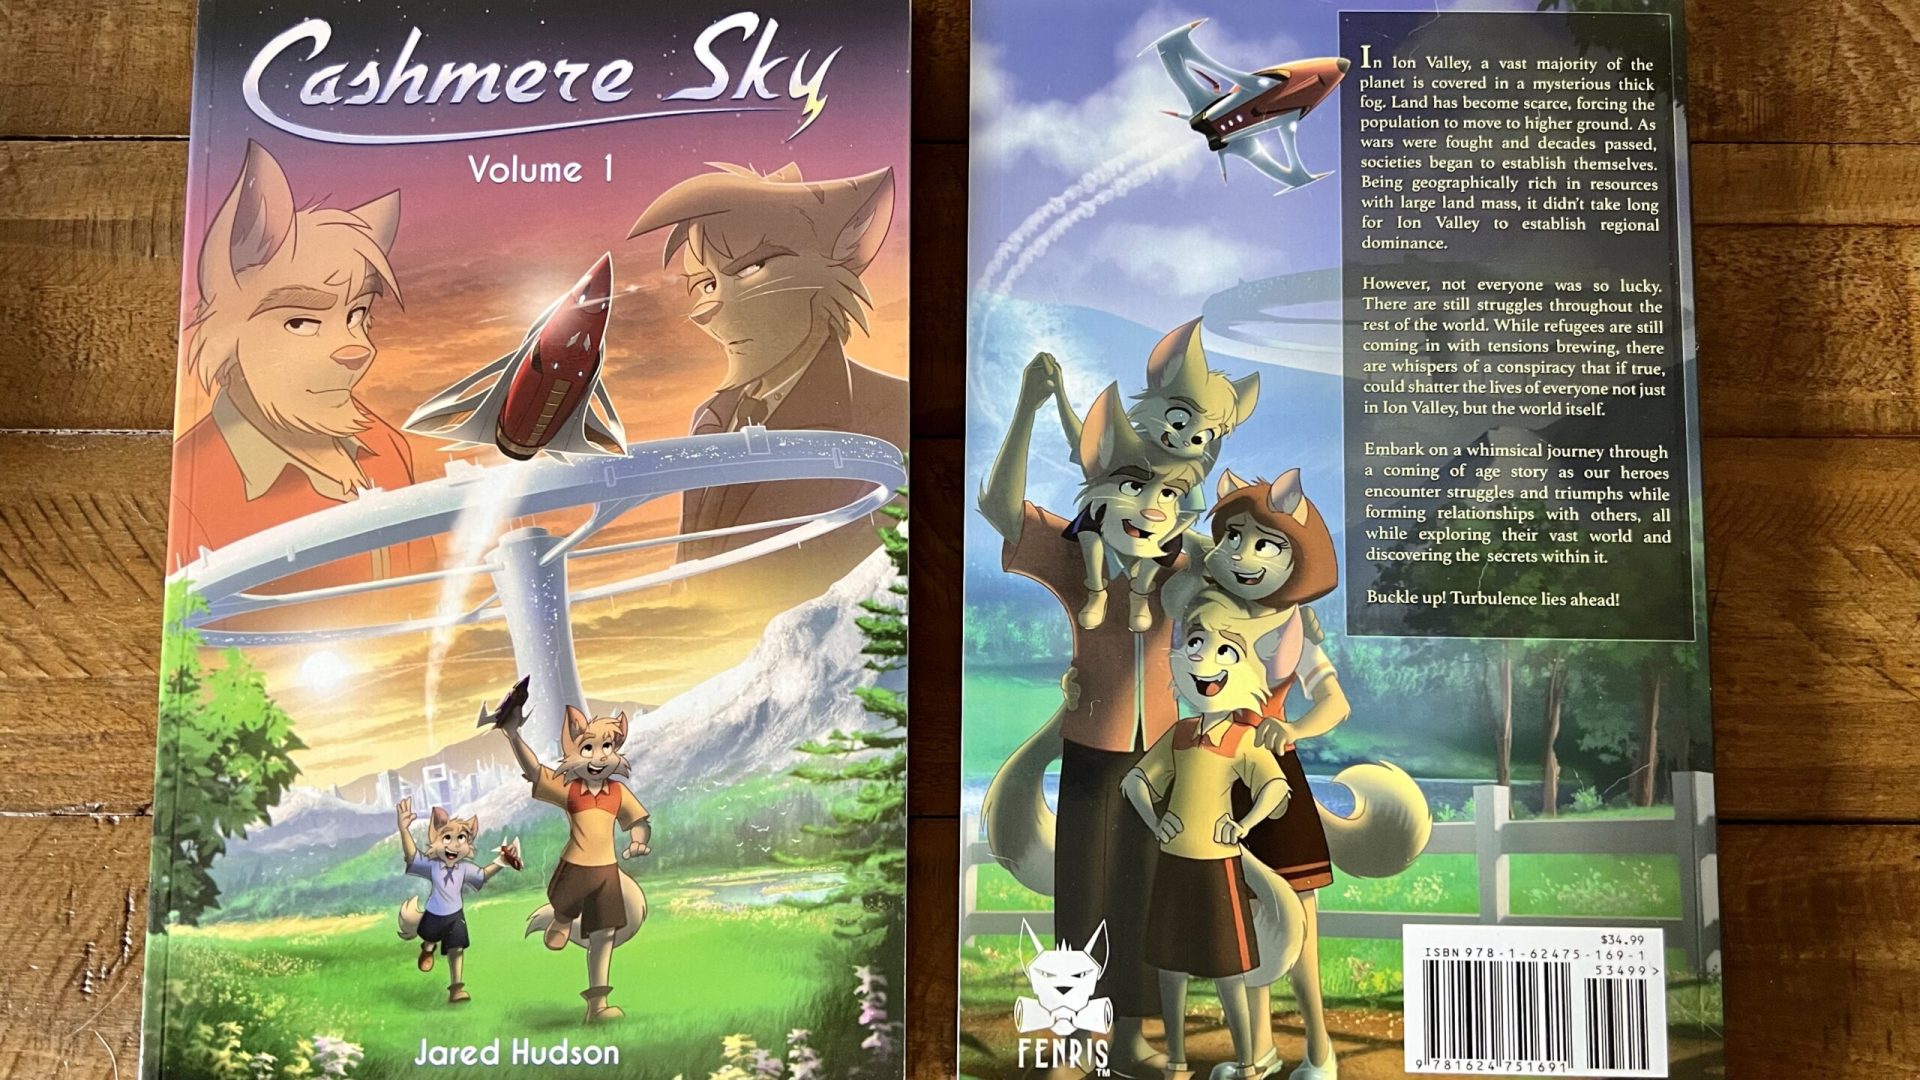 Cashmere Sky Volume 1 Book